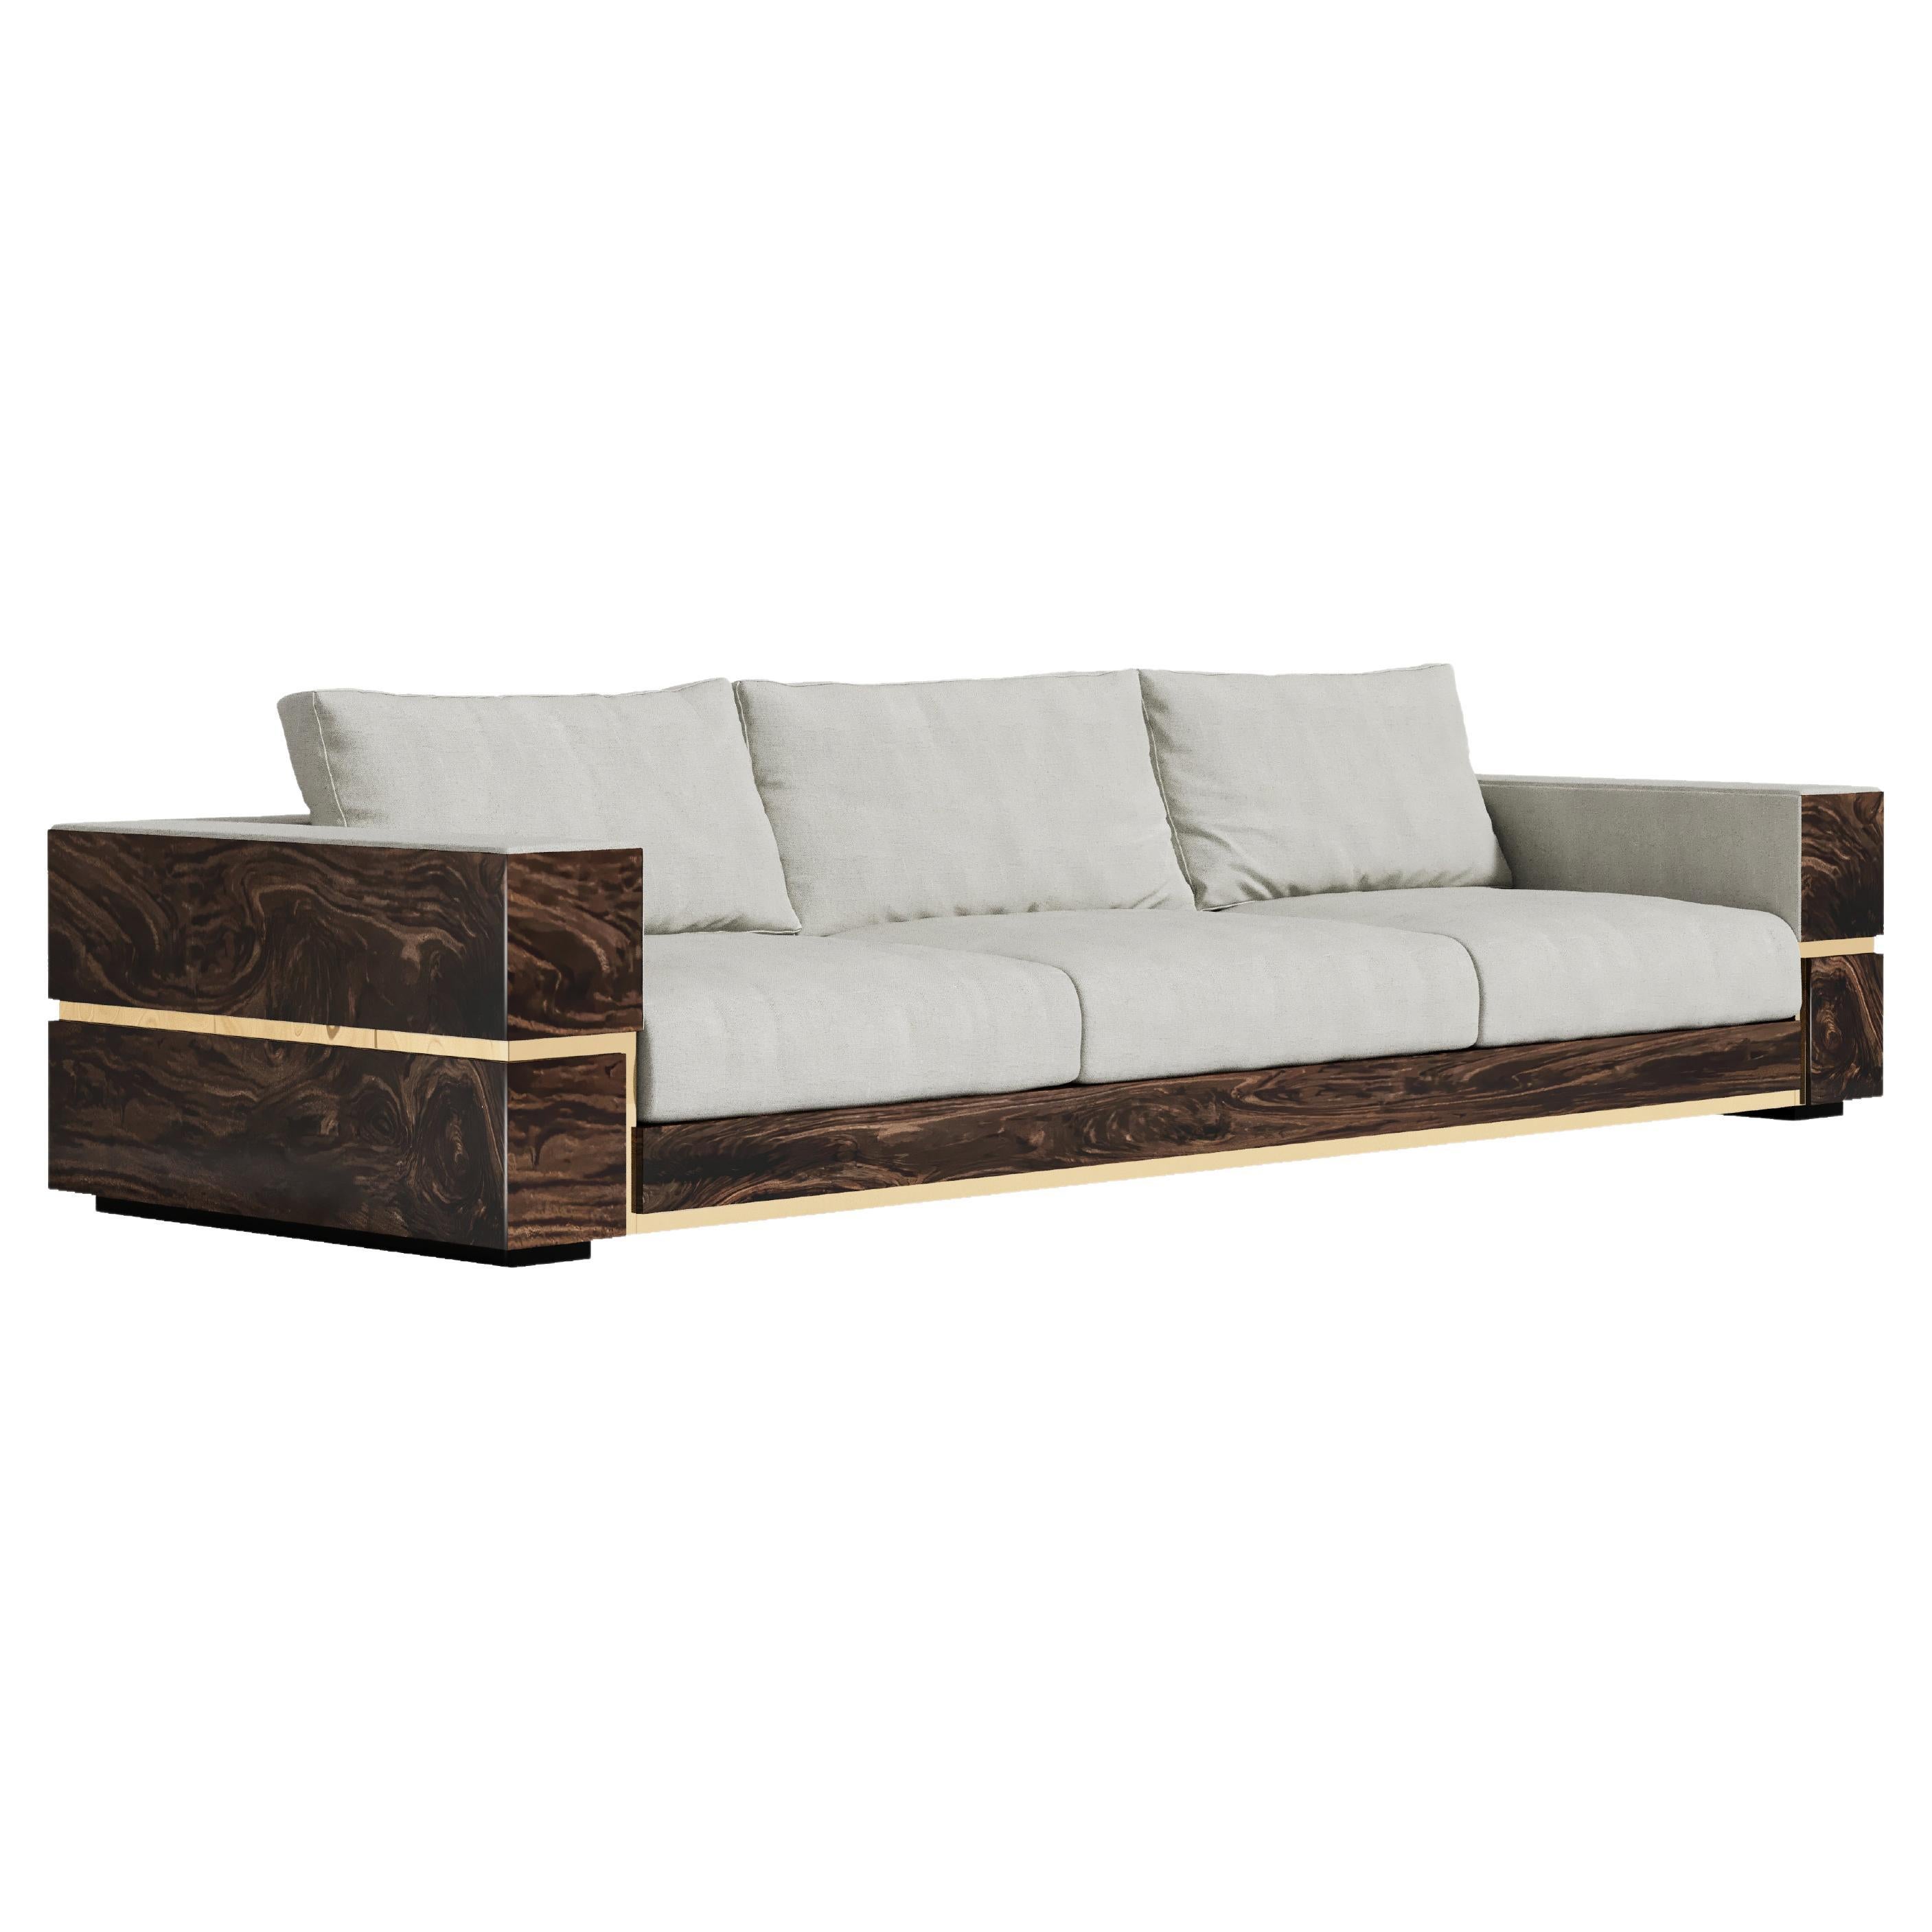 Balteus Sofa in Customizable Upholstery